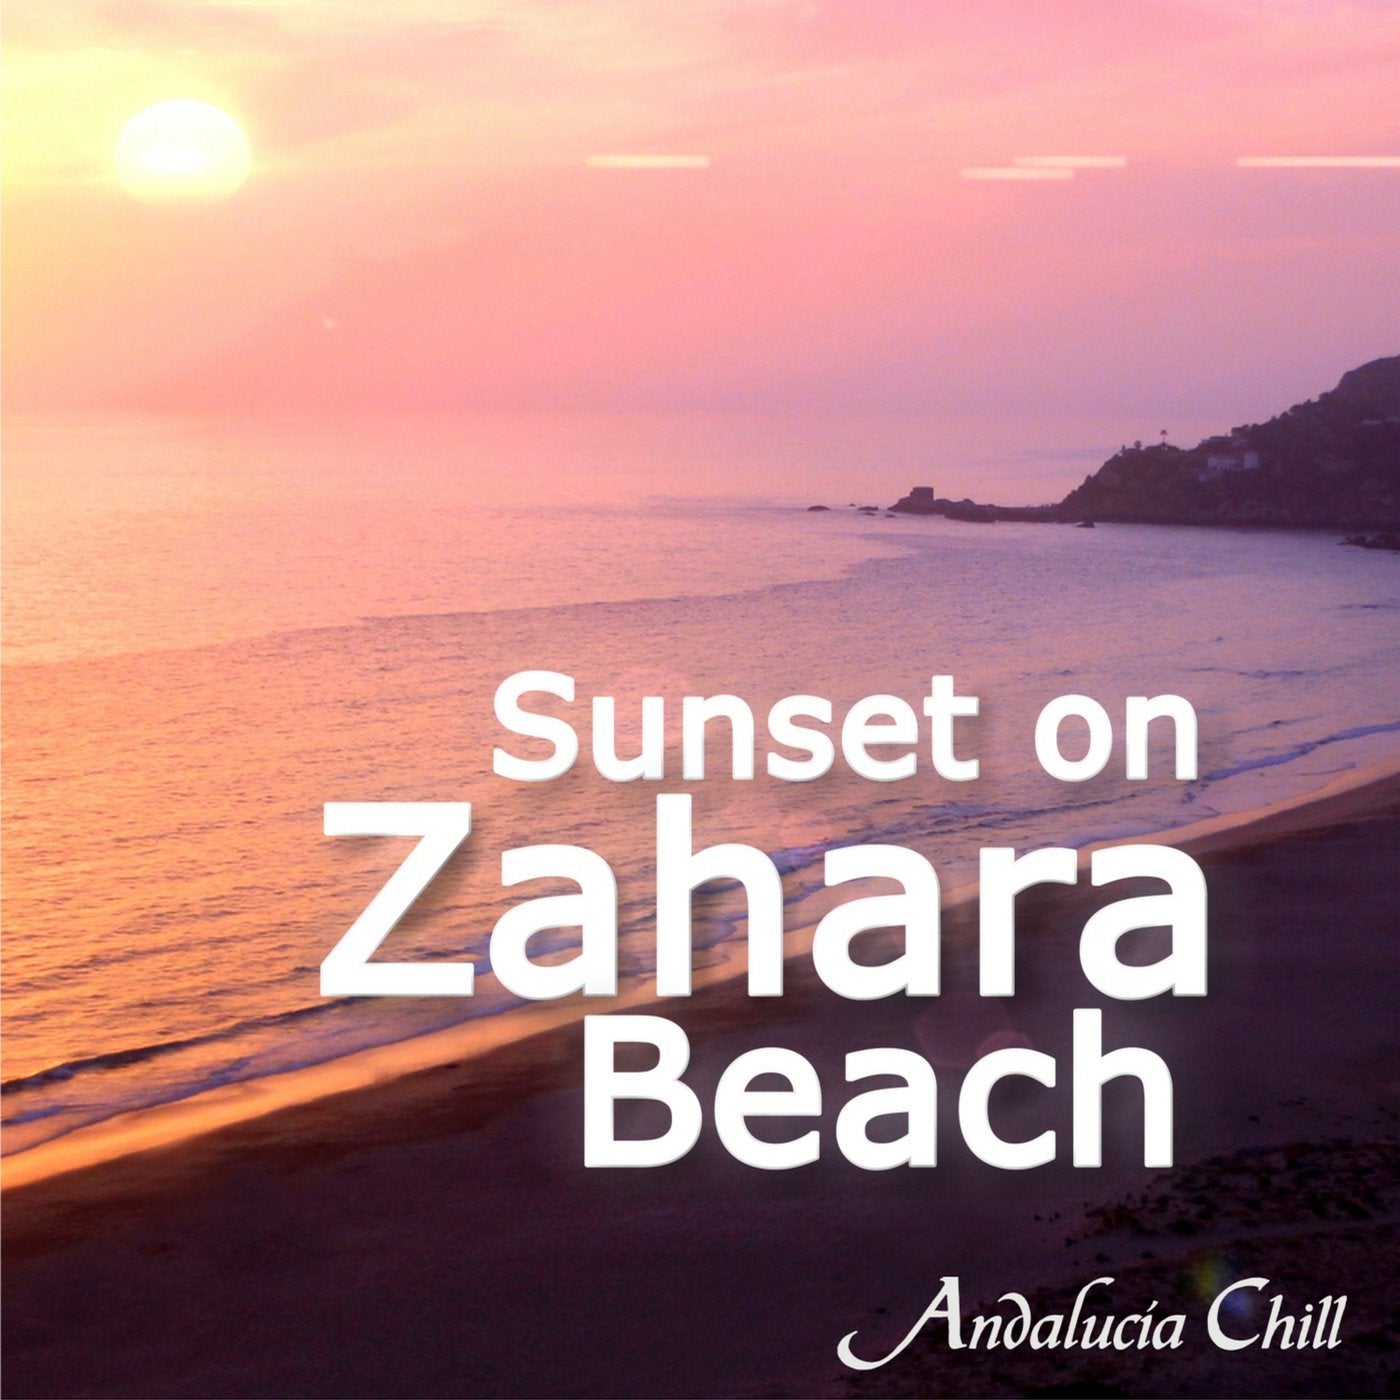 Andalucía Chill - Sunset on Zahara Beach